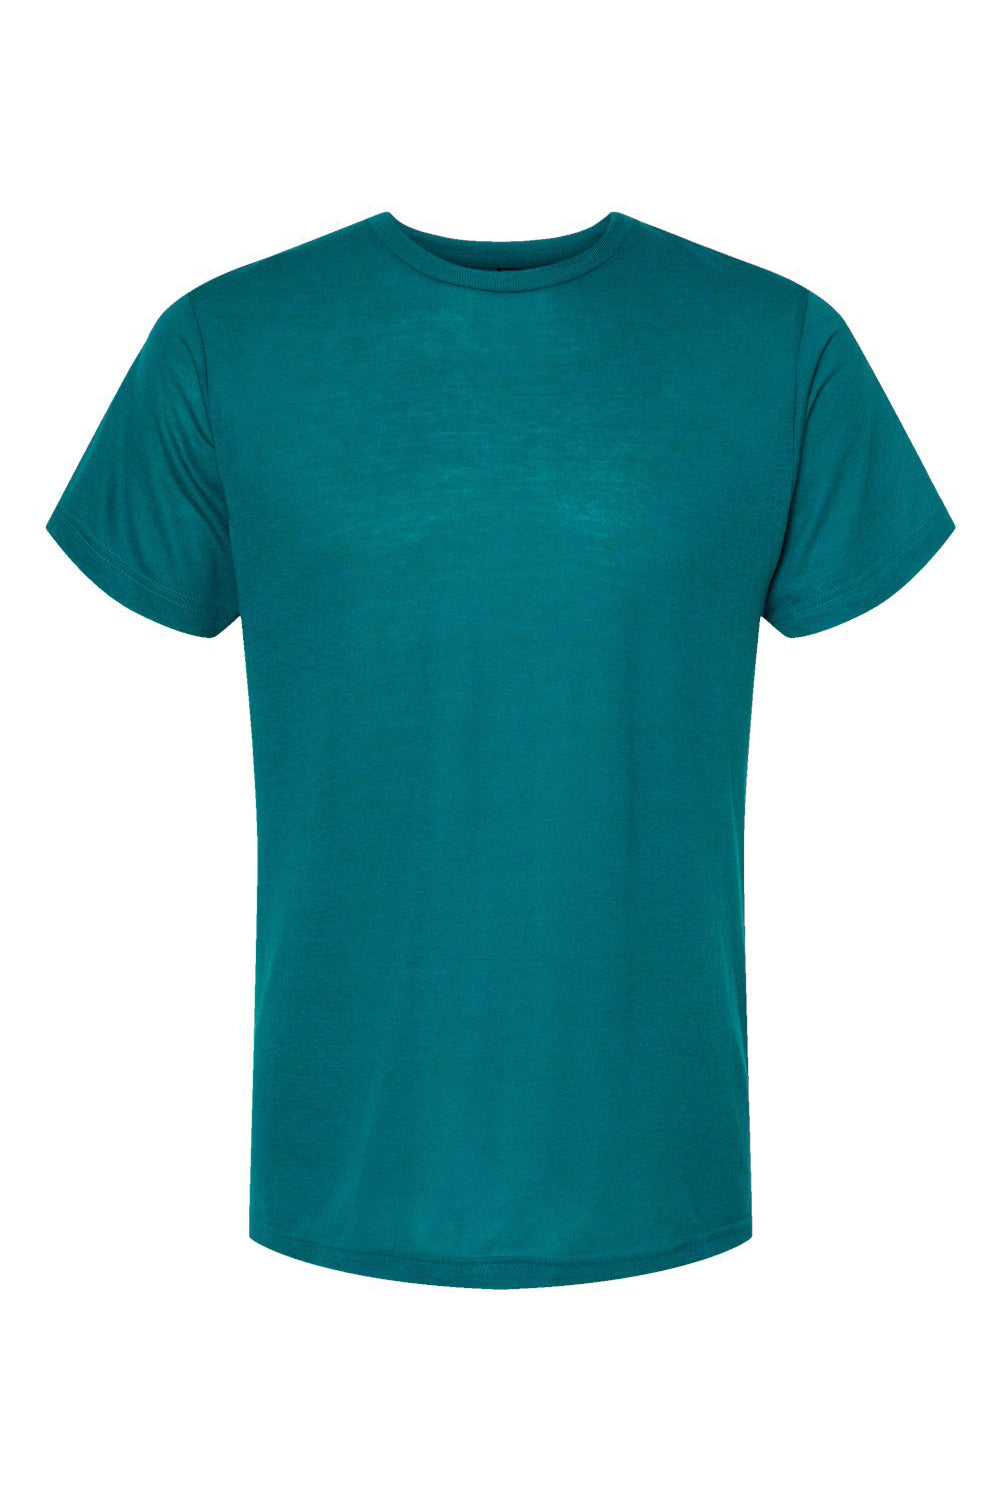 Tultex 254 Mens Short Sleeve Crewneck T-Shirt Jade Green Flat Front